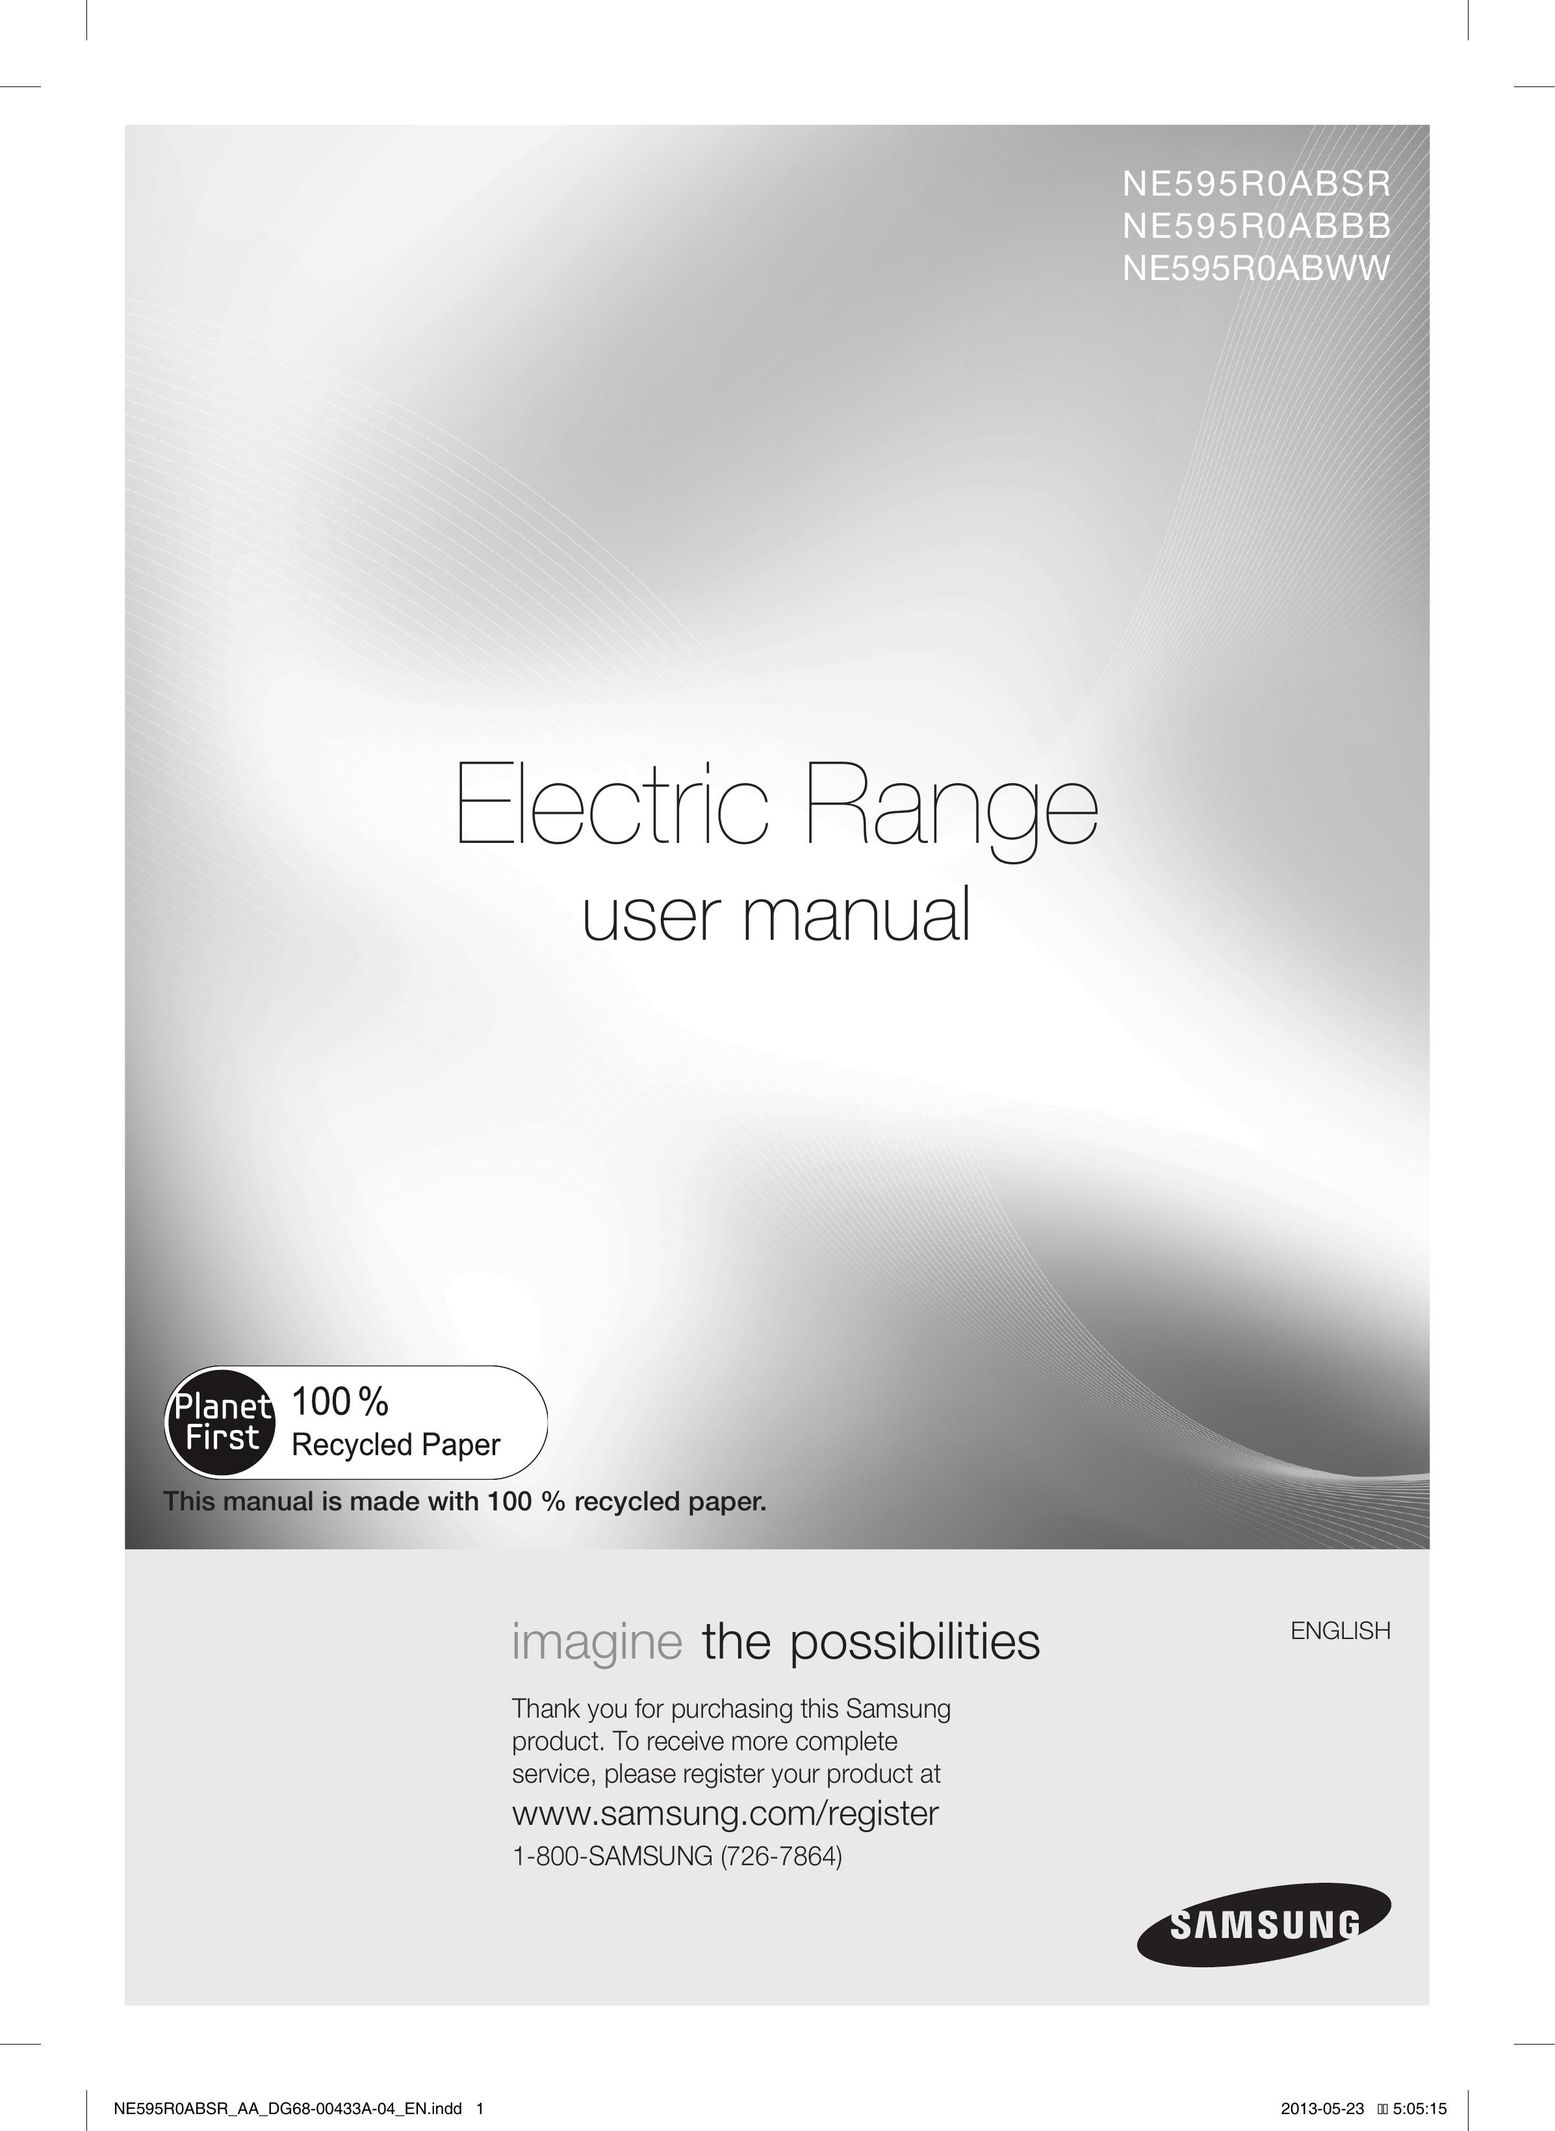 Samsung NE595R0ABSRAA Range User Manual